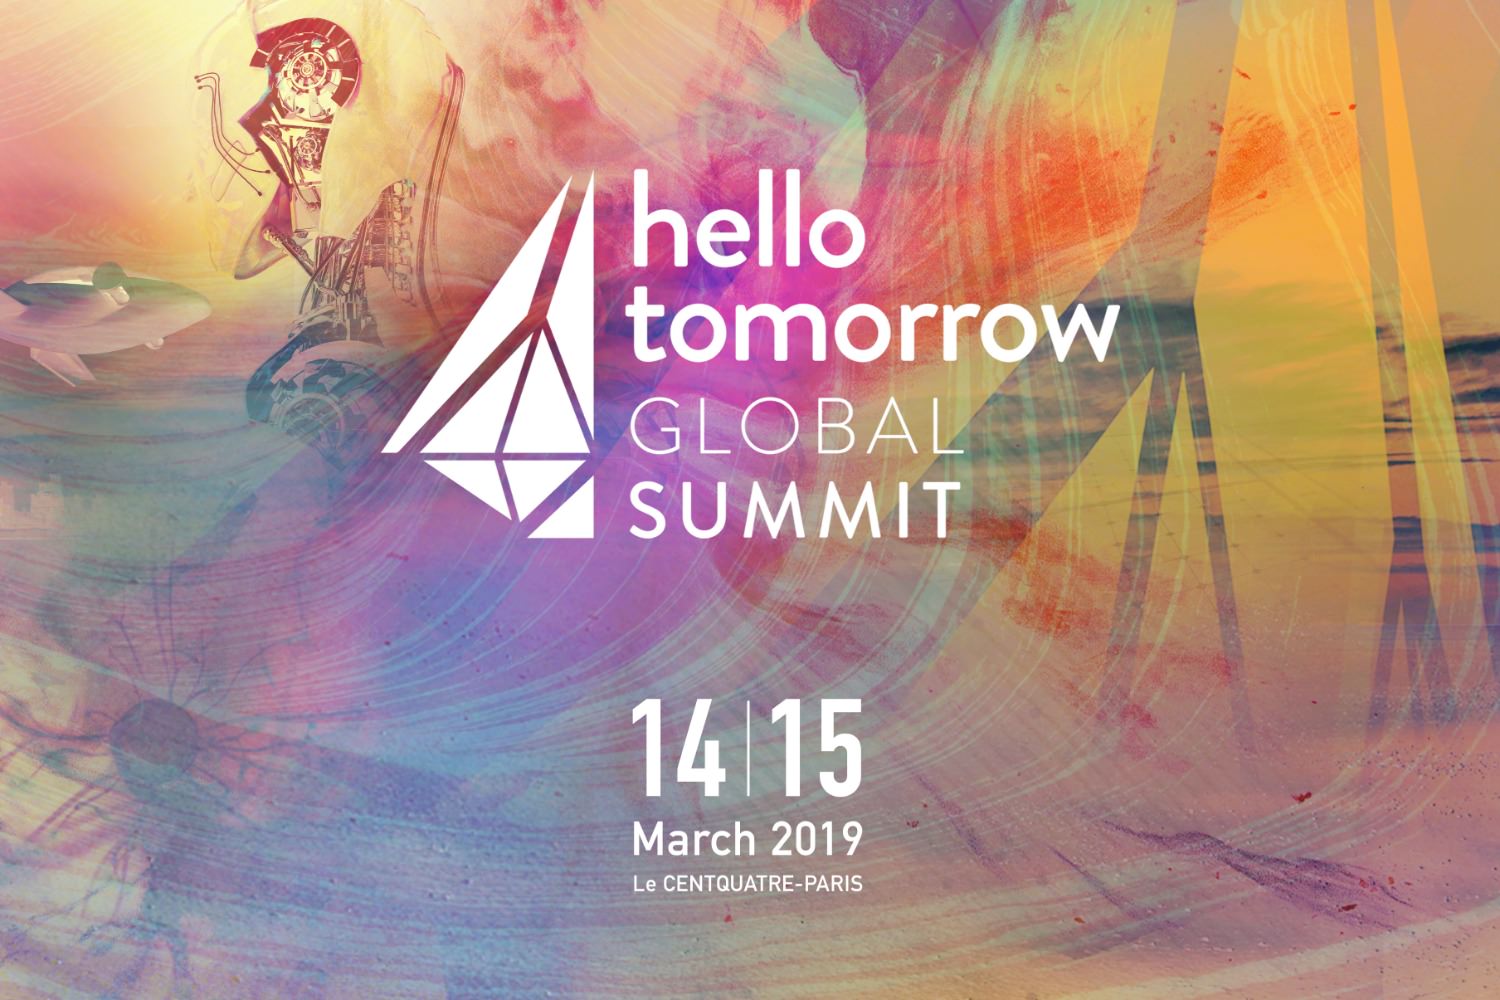 Hallo Tomorrow Global Summit 2019 